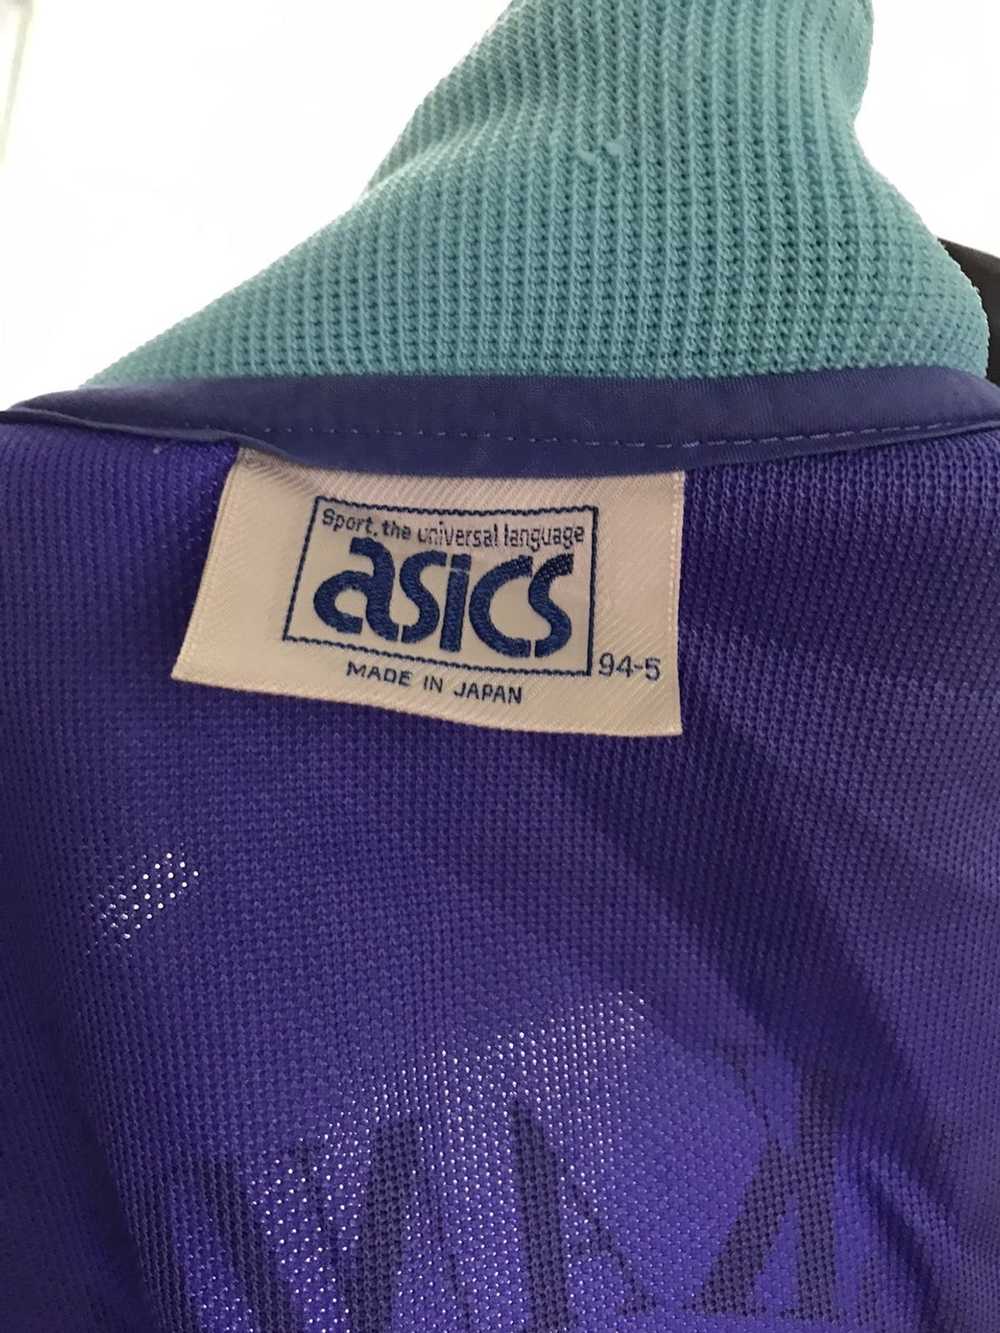 Asics × Sportswear VINTAGE ASICS x SPORTWEAR - image 4